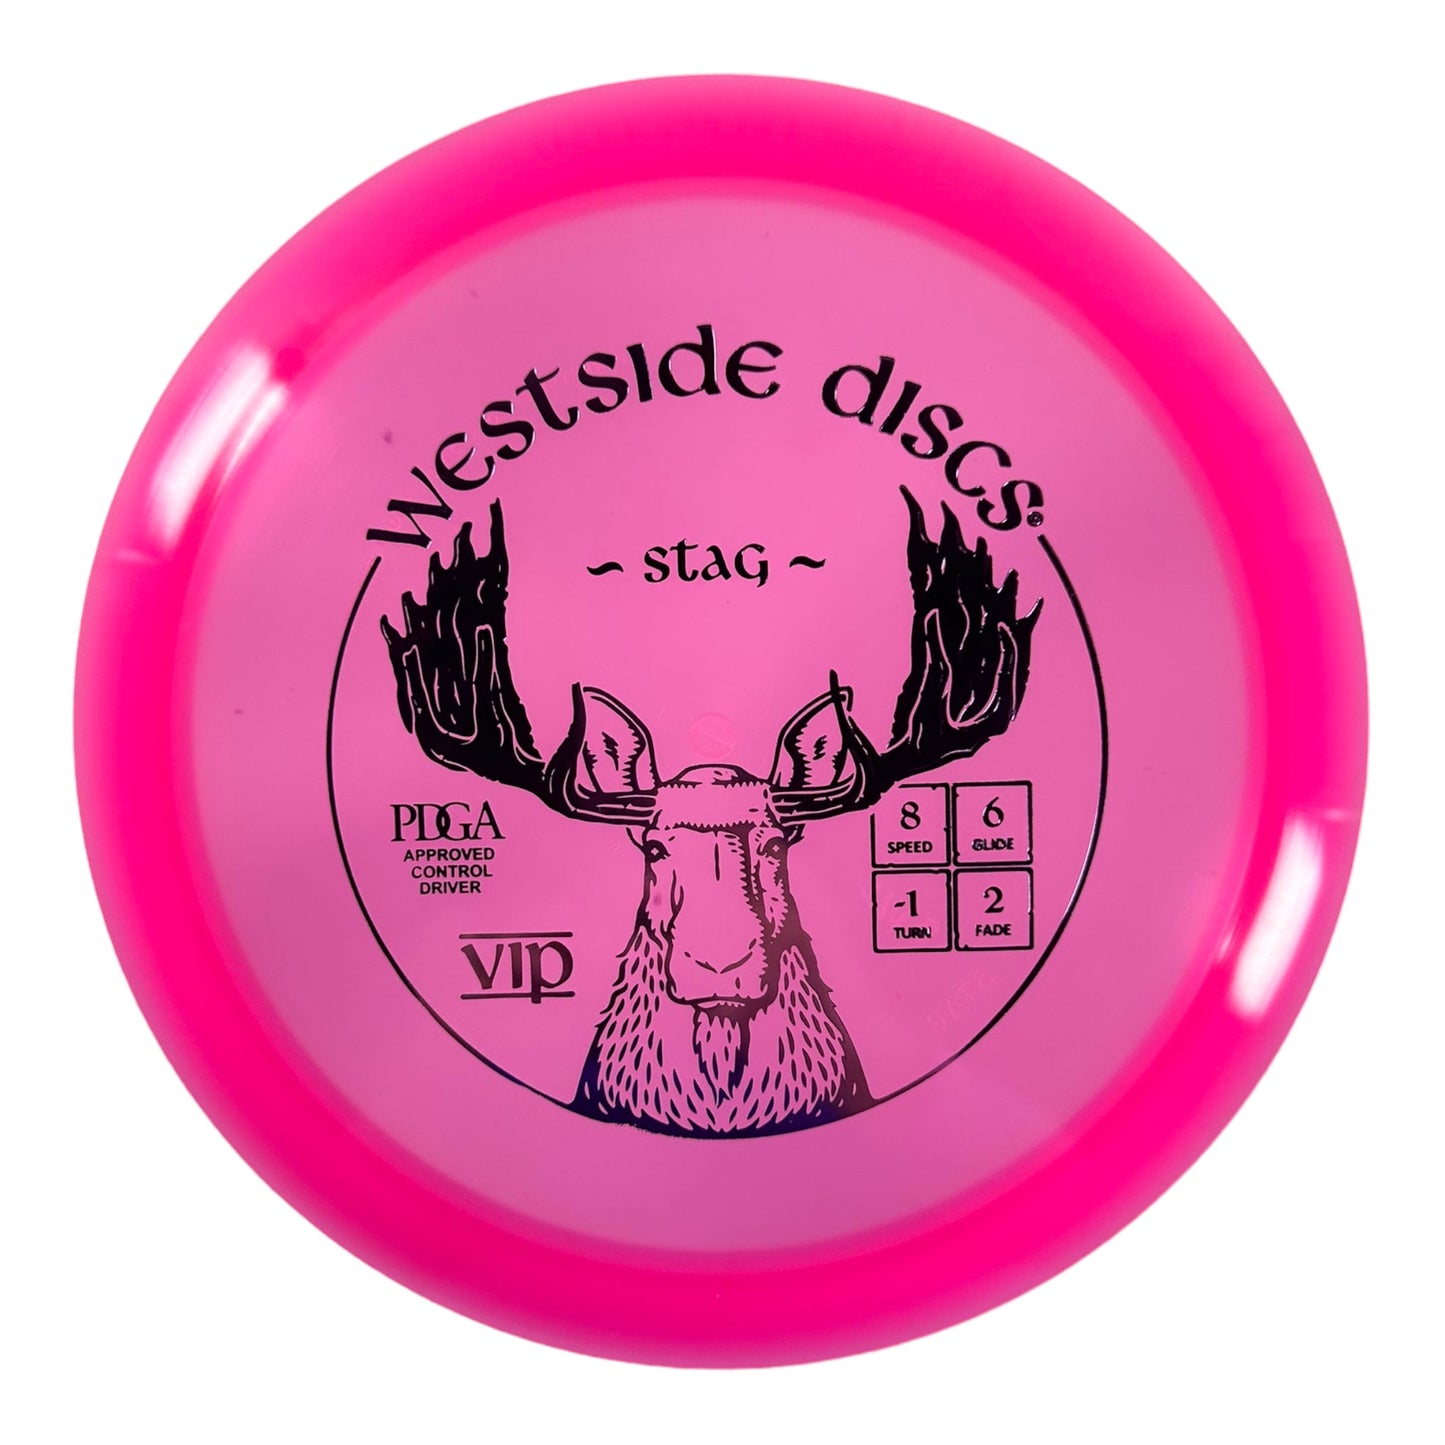 Westside Discs Stag | VIP | Pink/Pink 171g Disc Golf